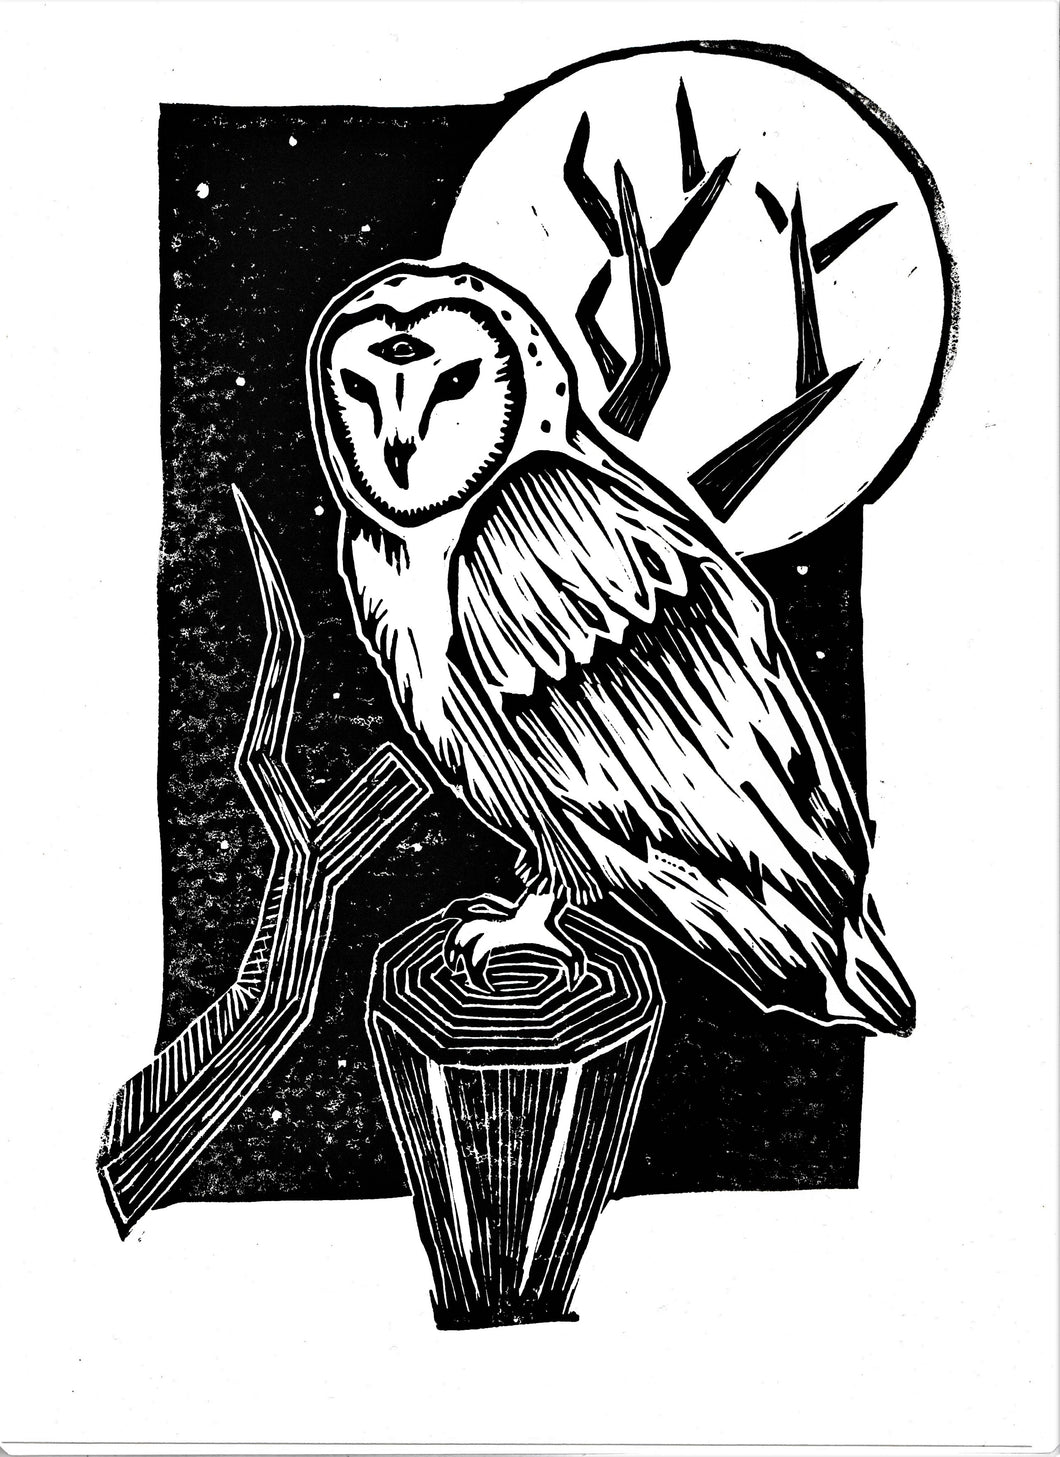 Barn owl in forest print- 3 eyed owl linocut print on paper - original art